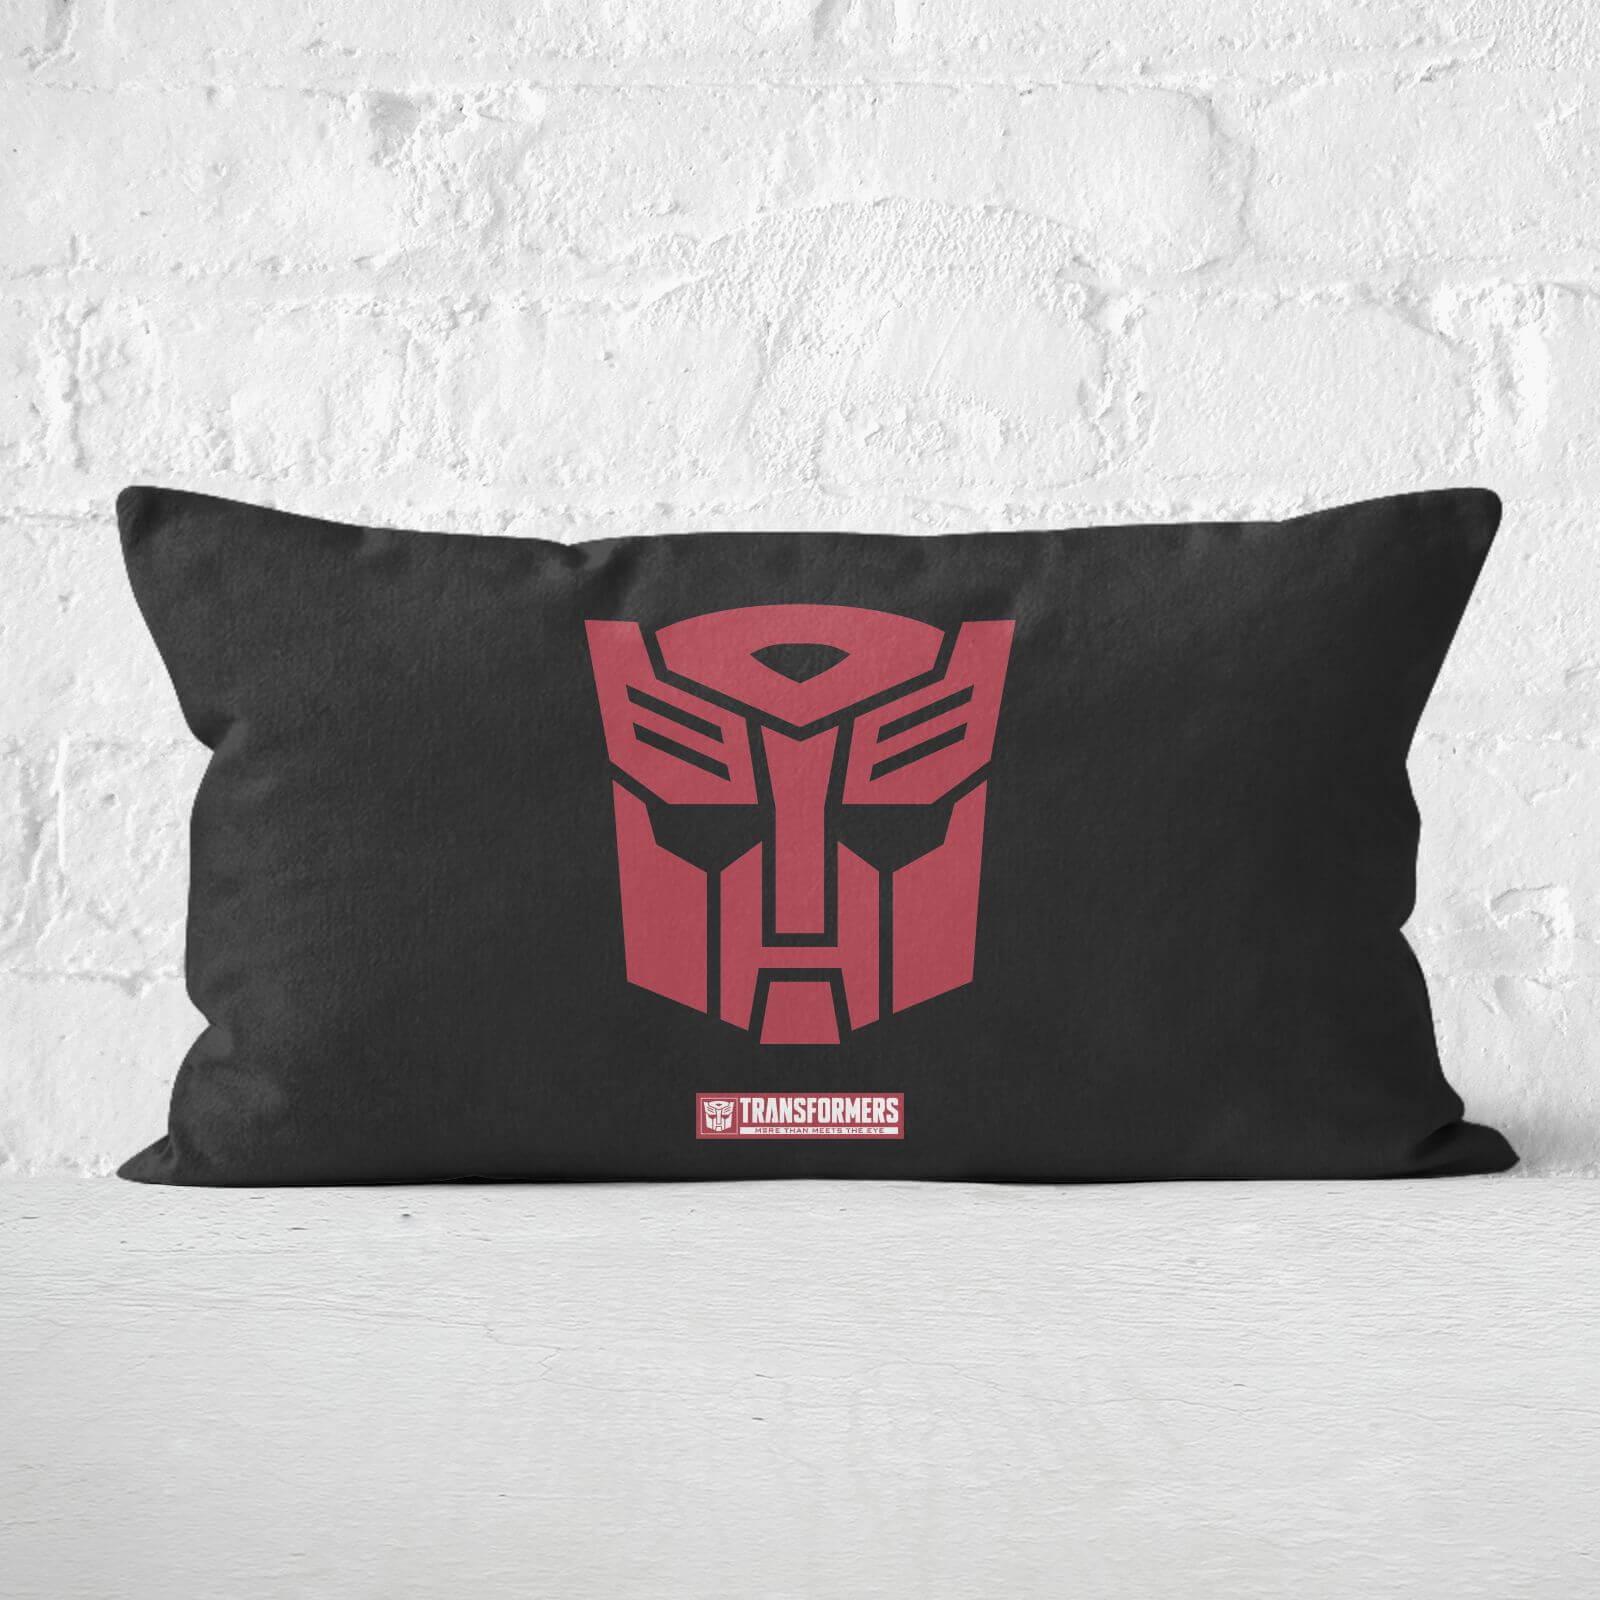 Transformers Public Service Announcement Rectangular Cushion - 30x50cm - Eco Friendly